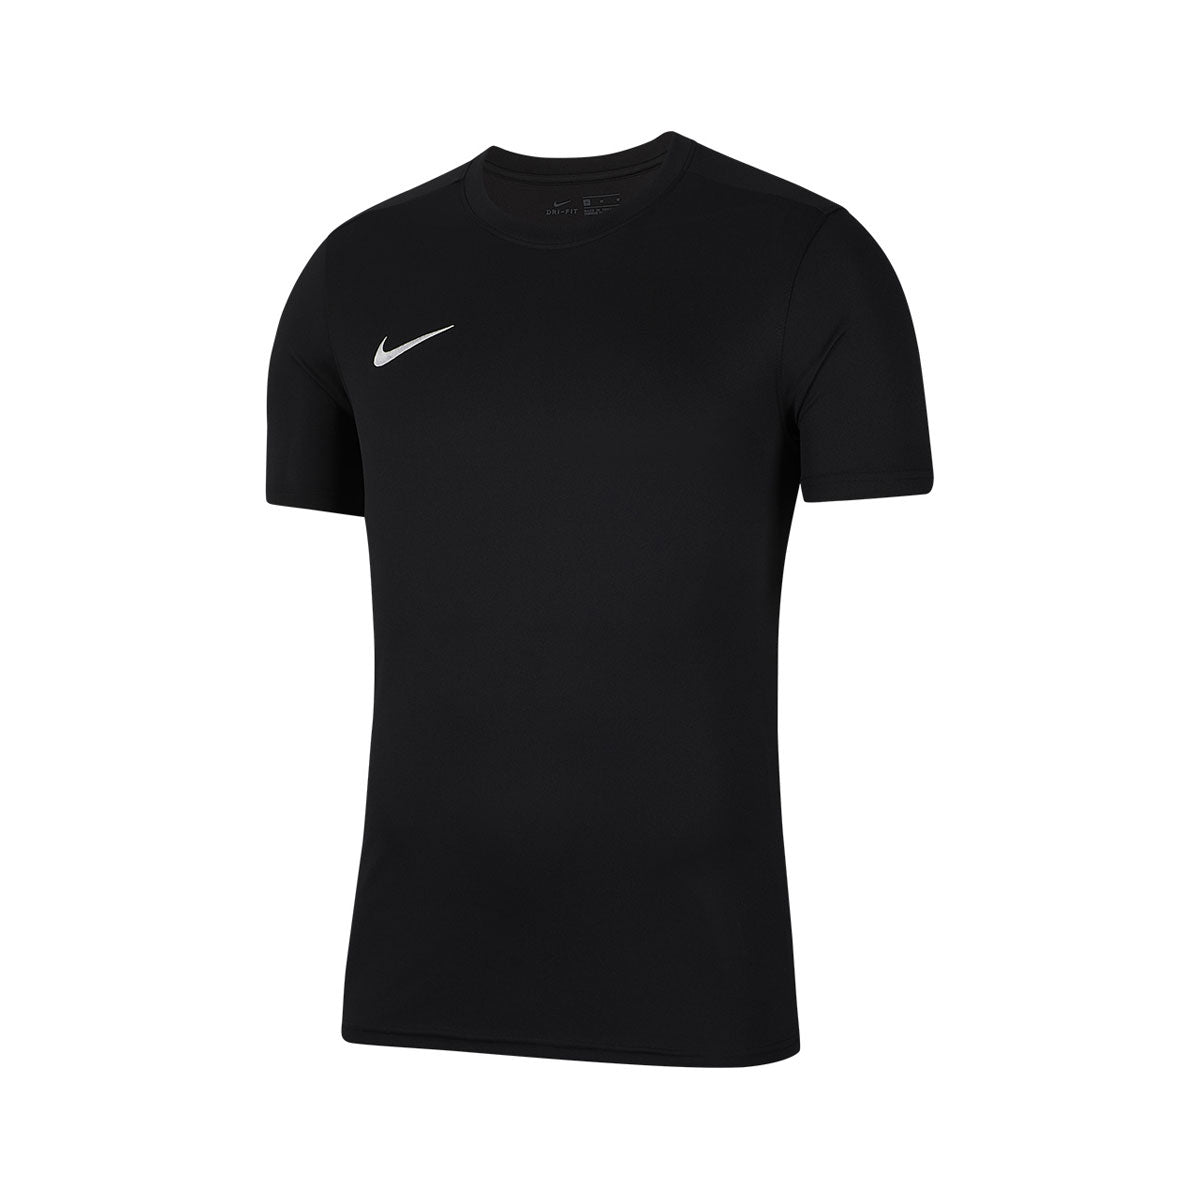 Nike Men's Dry Park VII Training Top Shirts